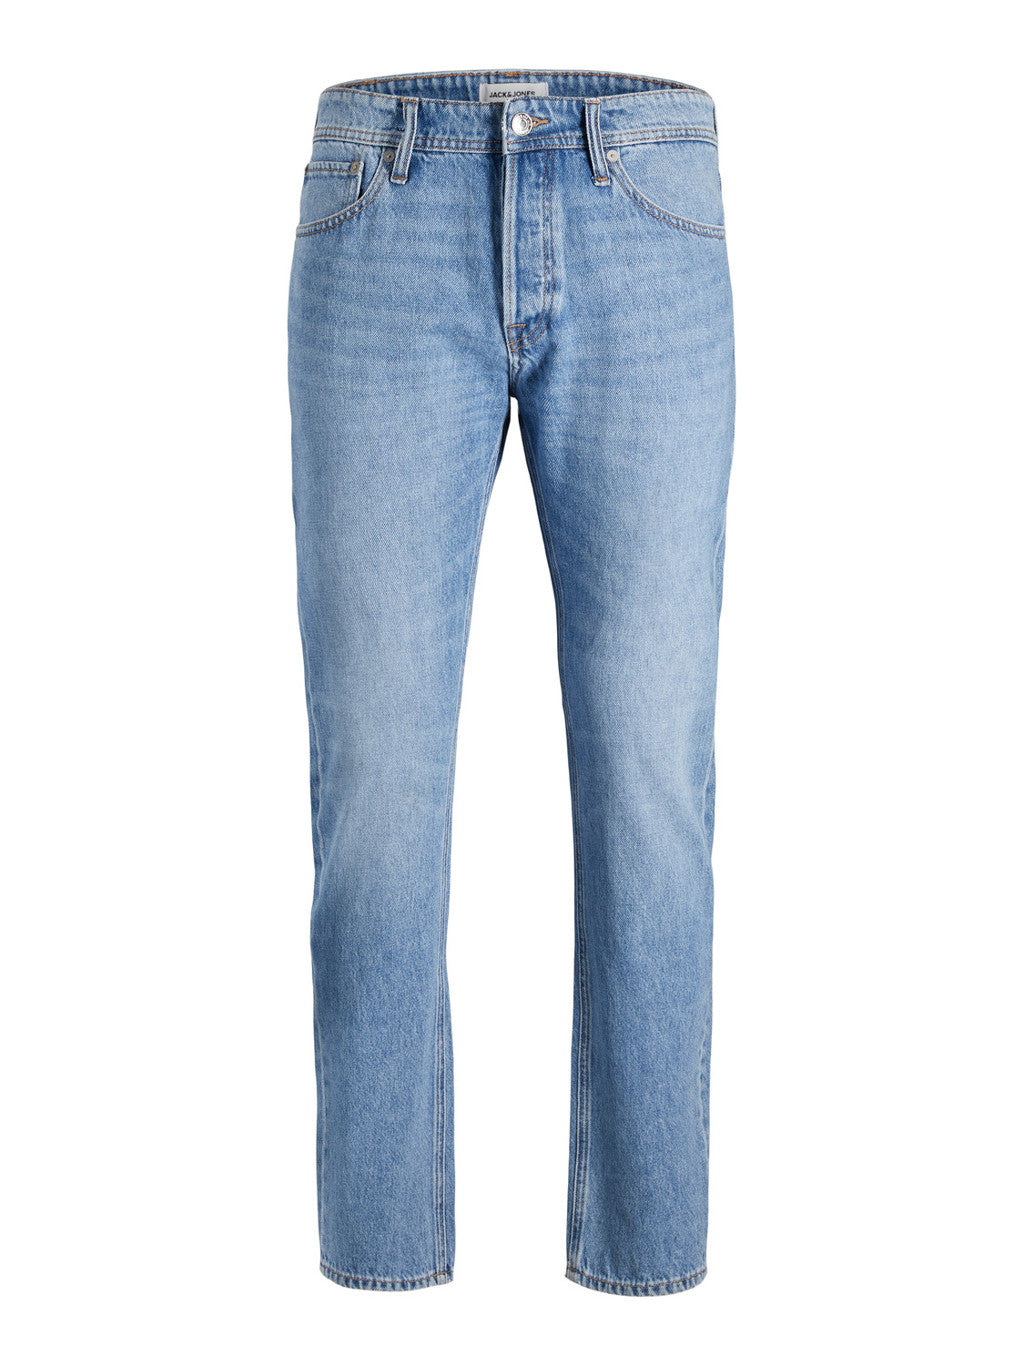 Jeans Mike Original 023, blue denim